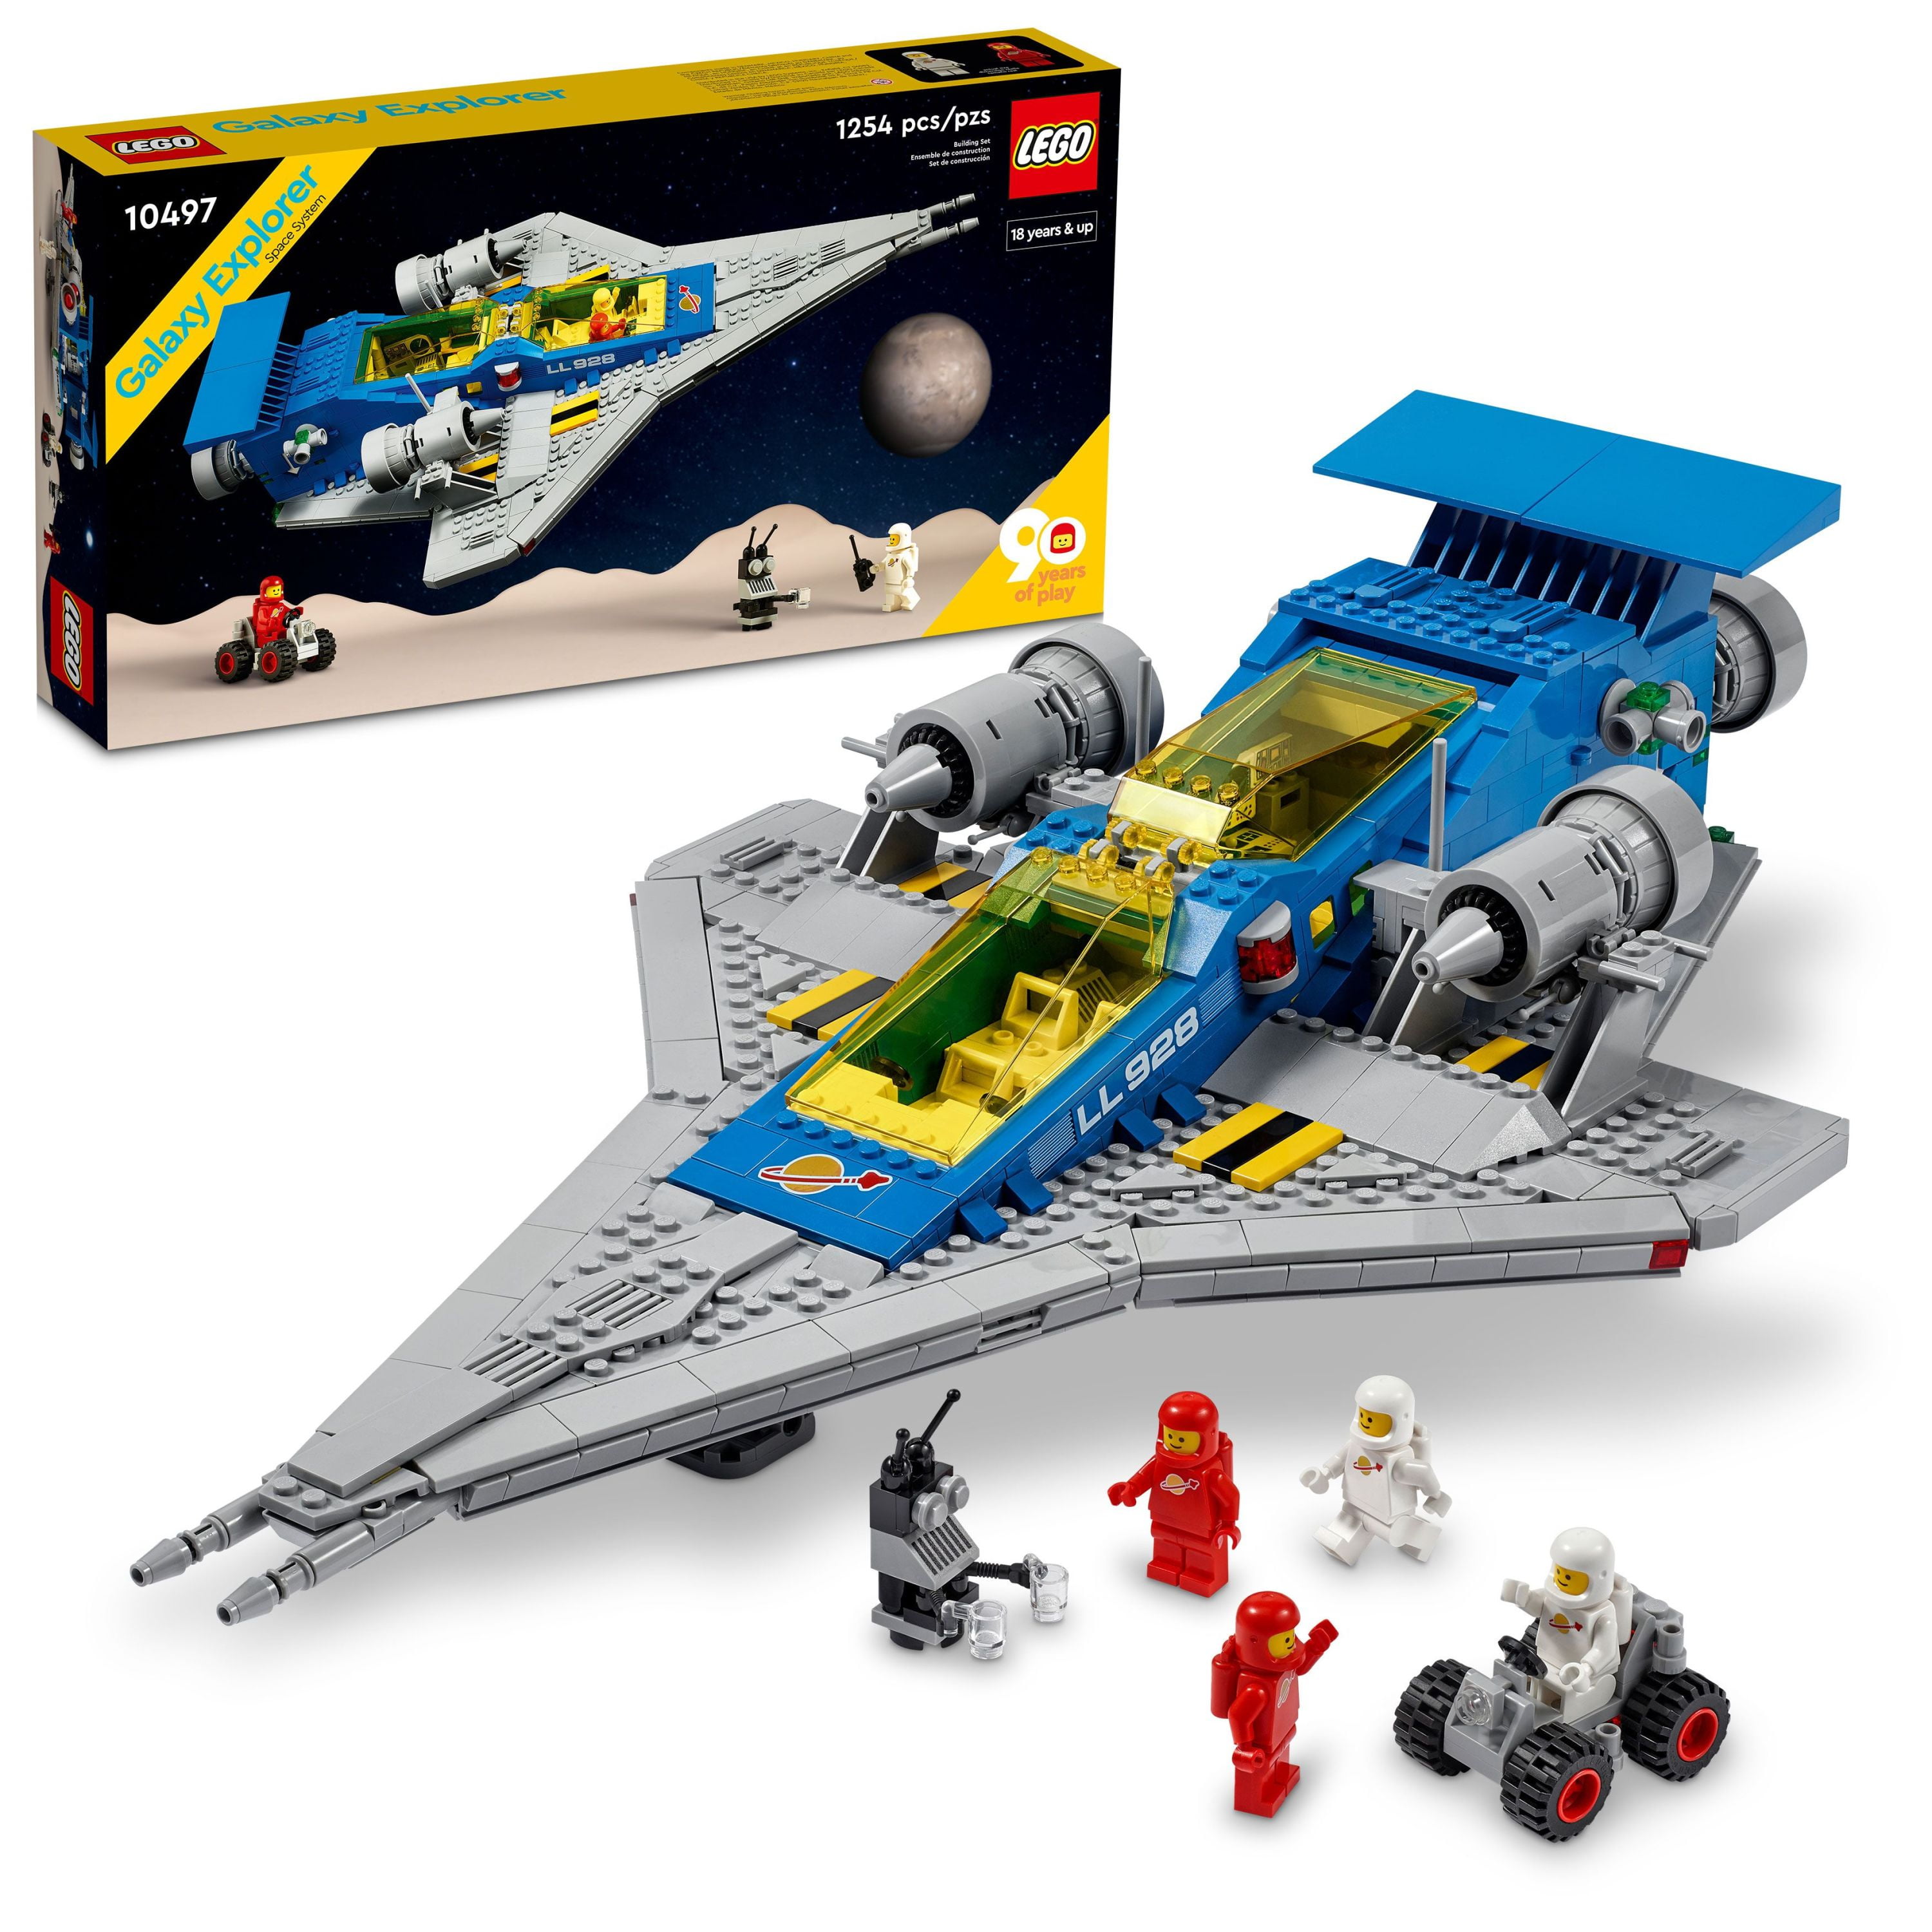 LEGO Galaxy Explorer Building Set